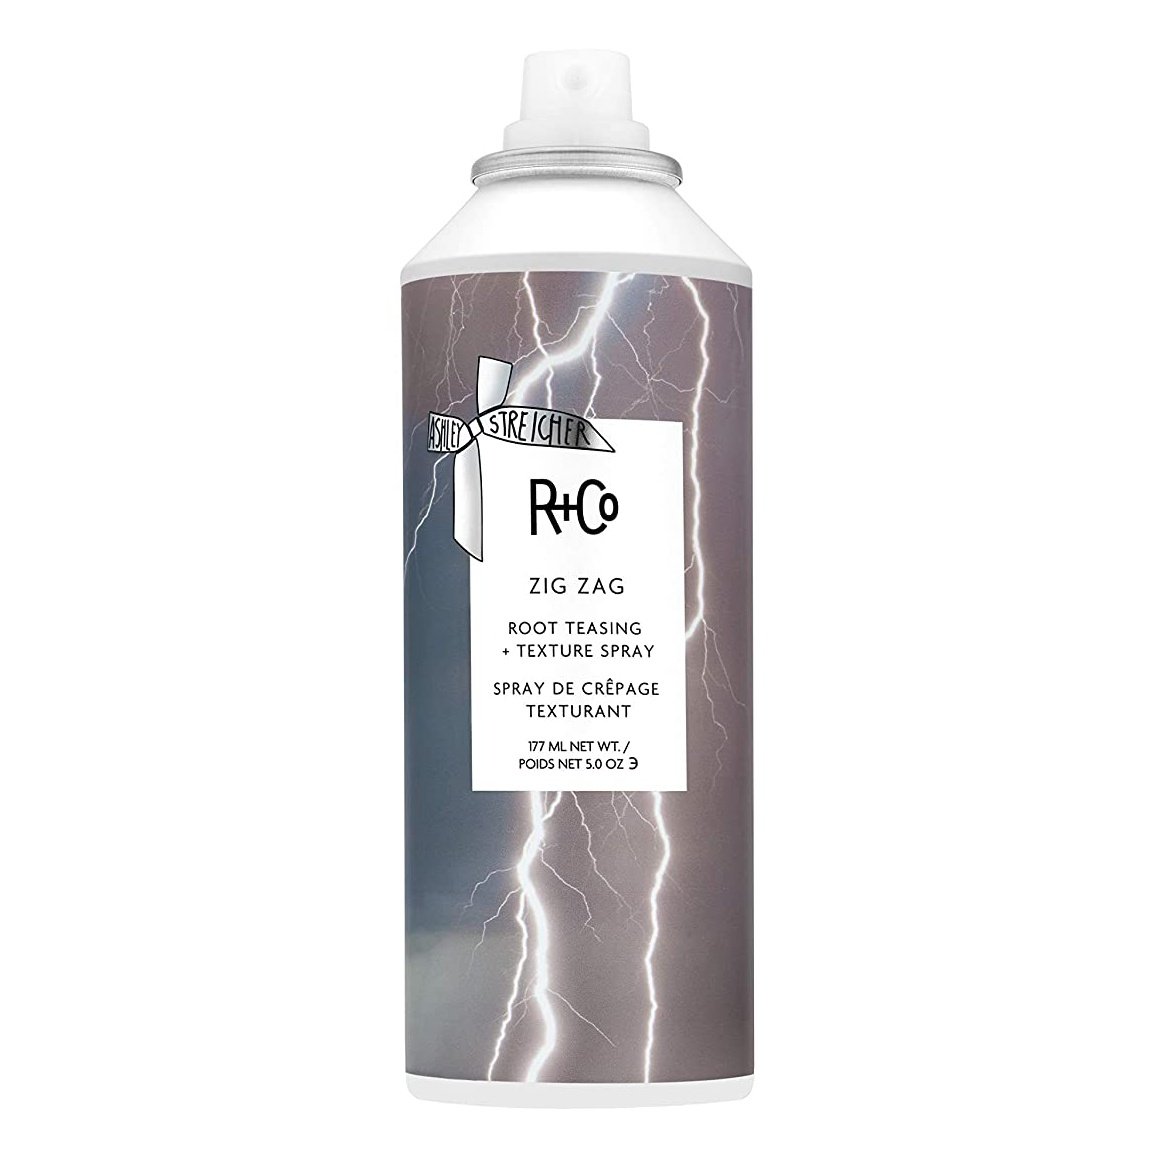 R&CO Zig Zag Root Teasing  Texture Spray 5 oz